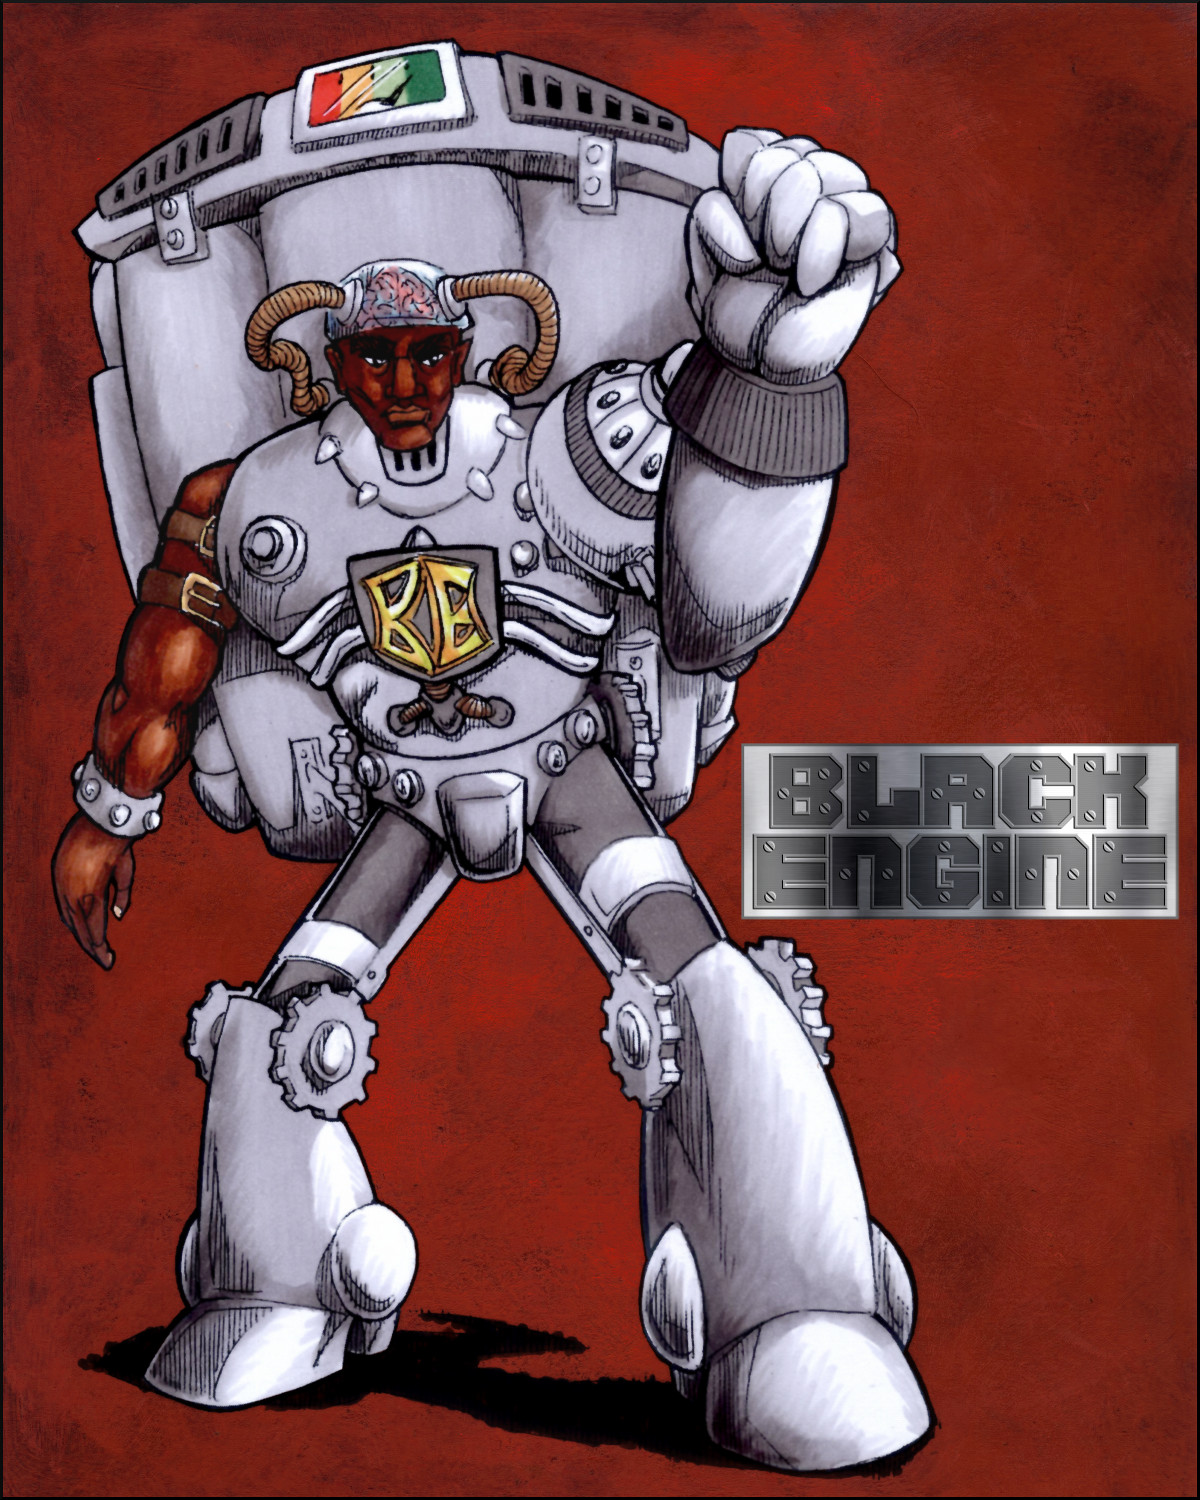 The Black Engine makes an impressive cyborg supervillain.